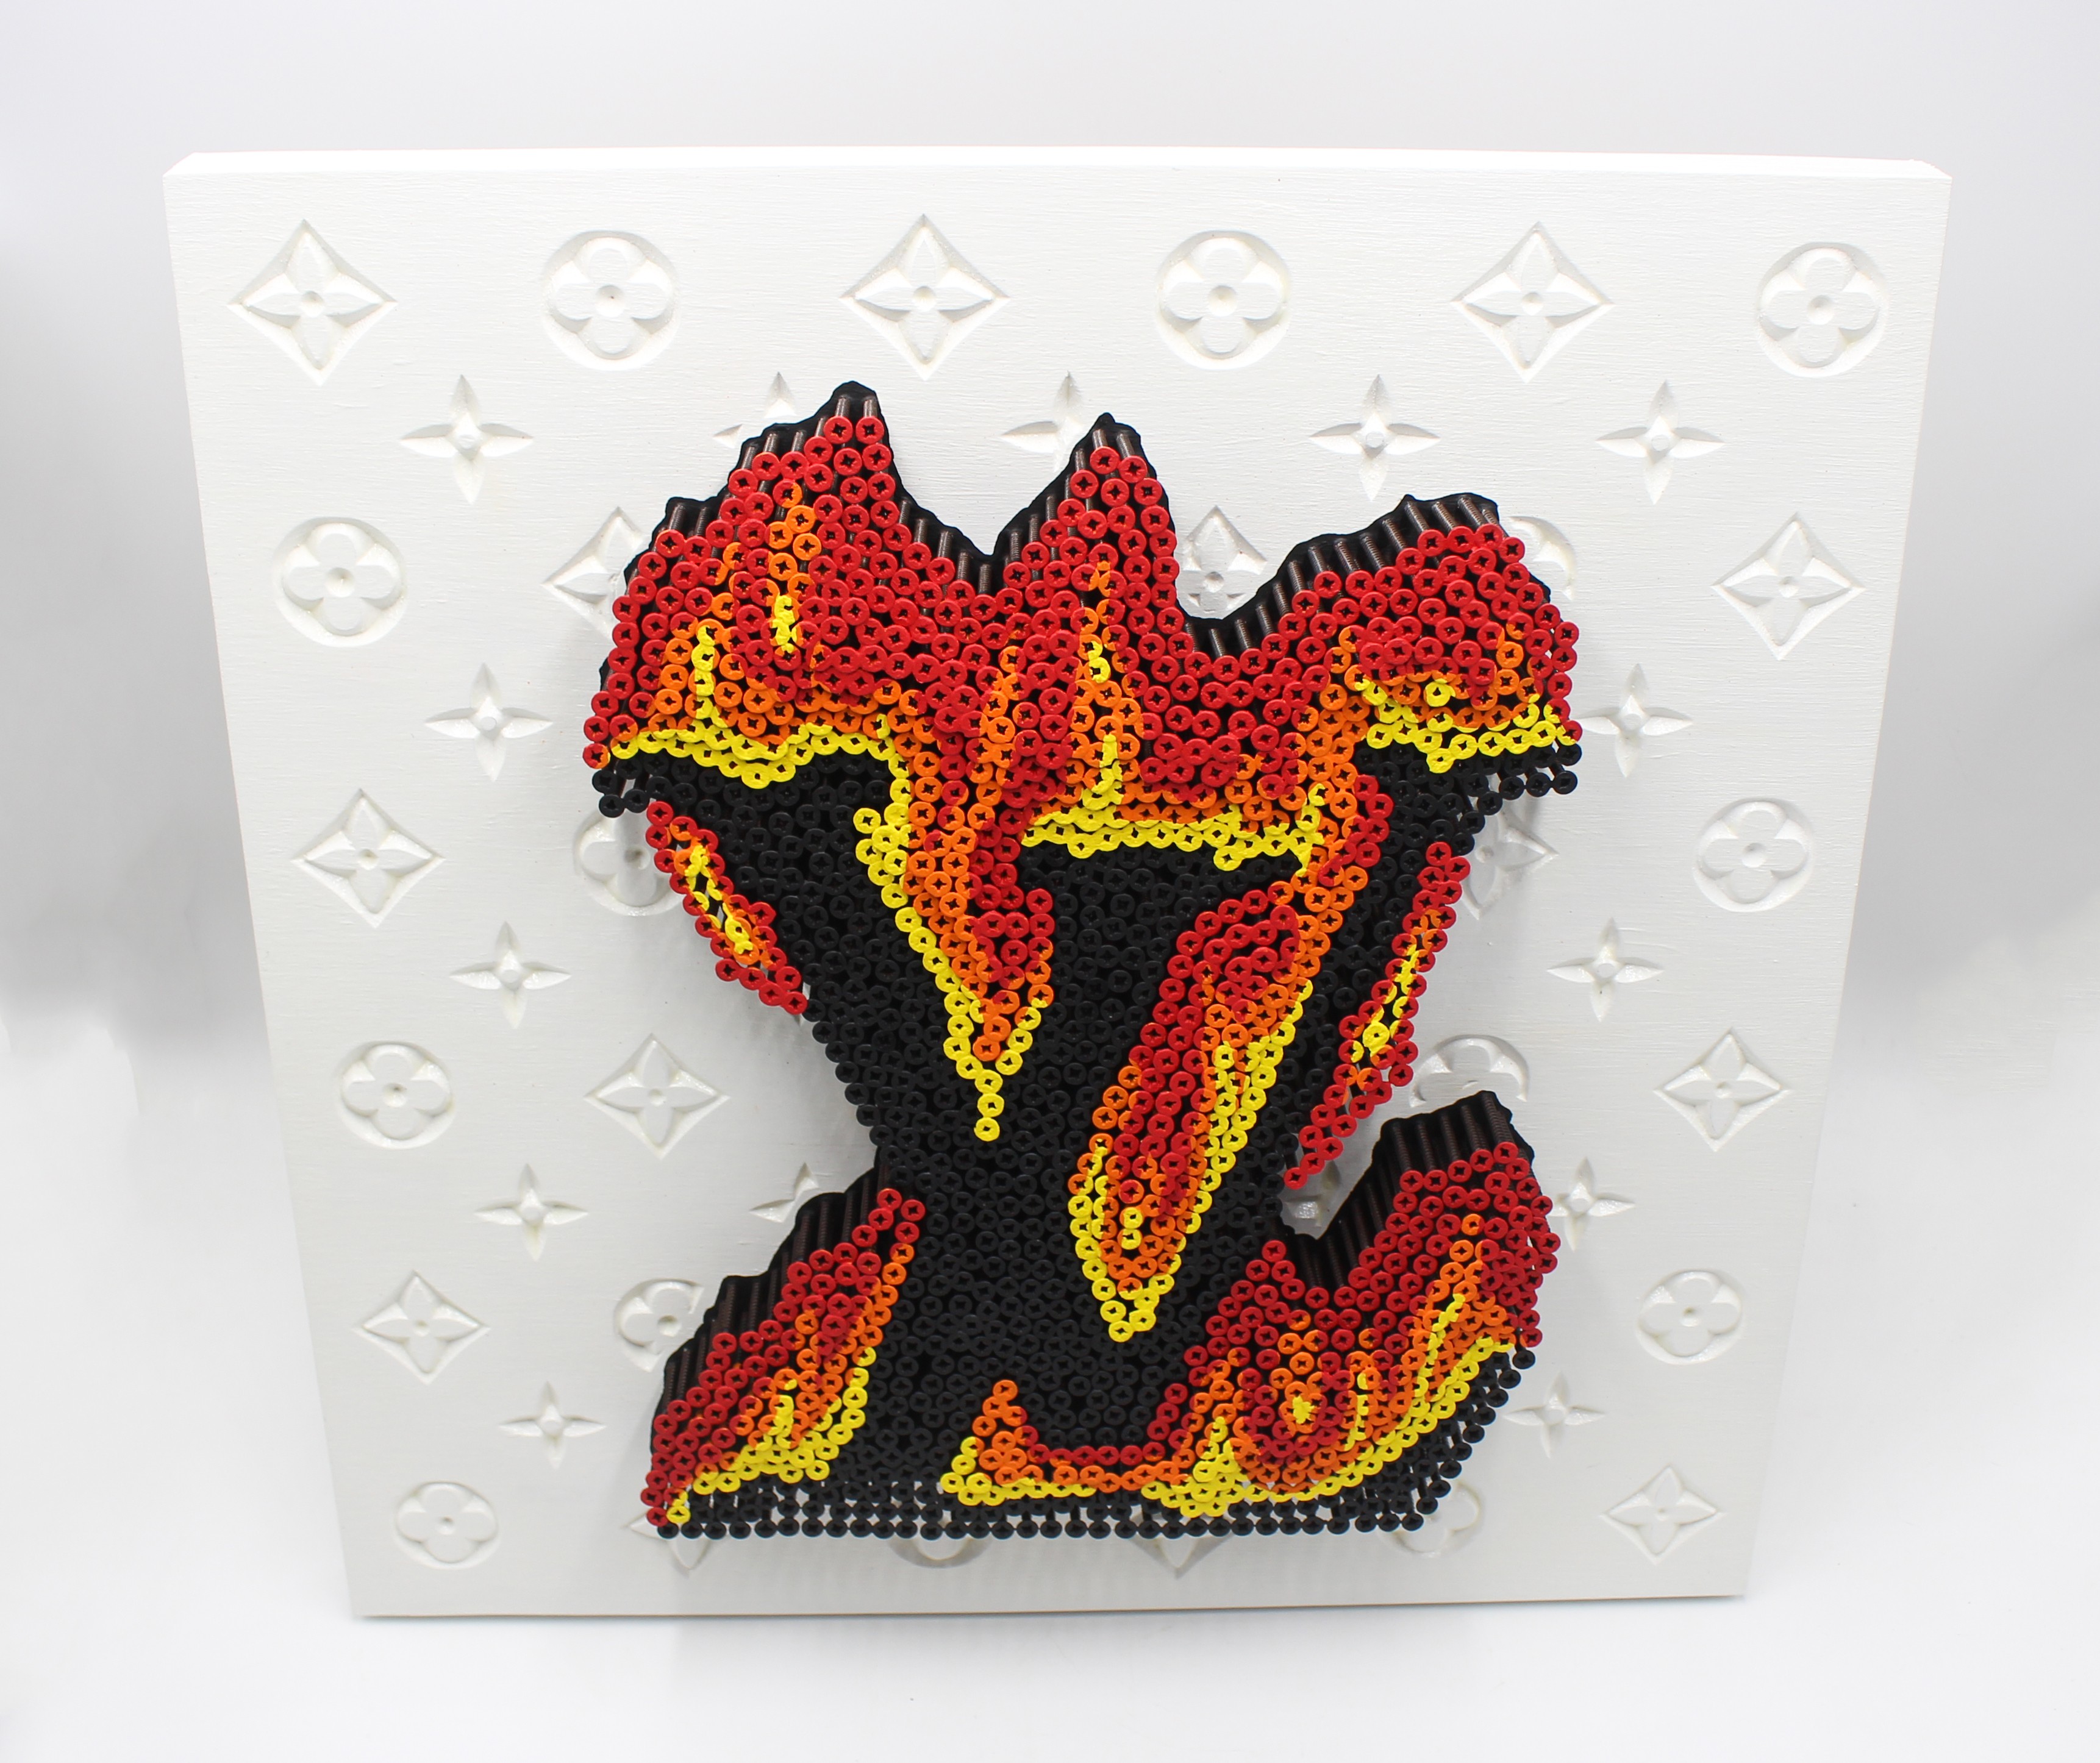 Louis Vuitton on fire by Alessandro Padovan - CharityStars